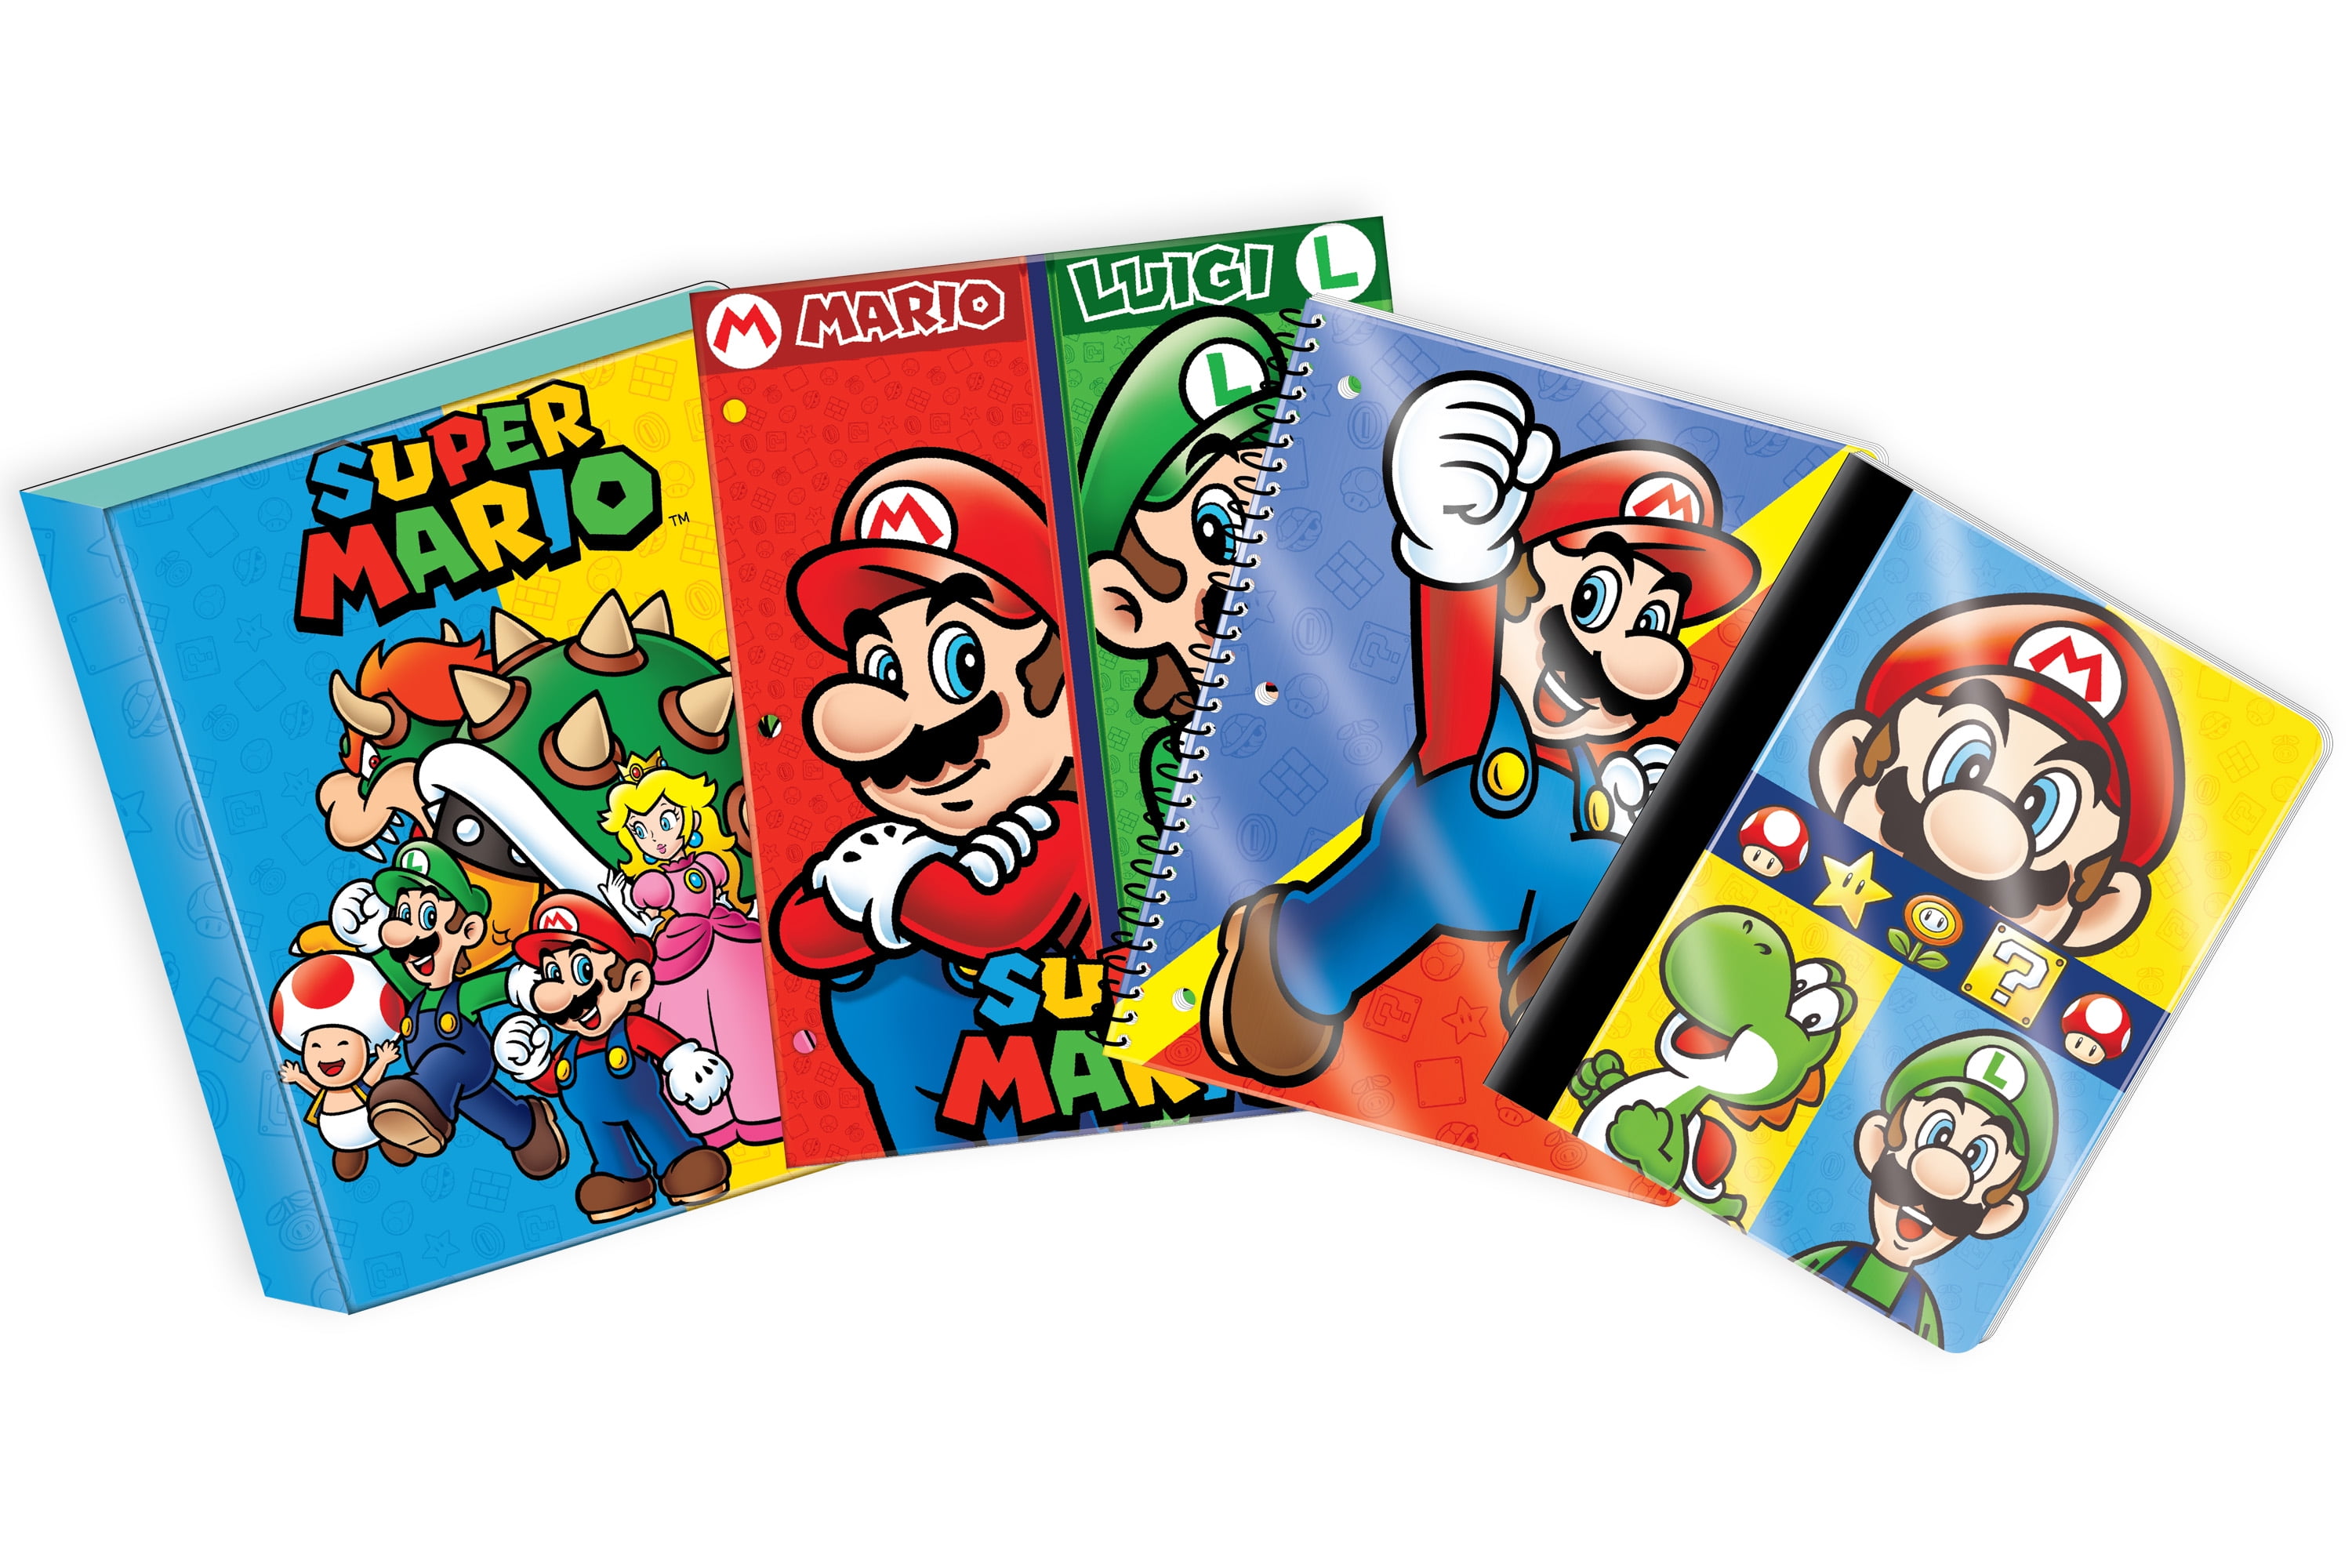 Nintendo Super Mario Bros. Stationery Bundle, 4 Count, Includes Composition  Notebook, Spiral Notebook, Folder and Binder